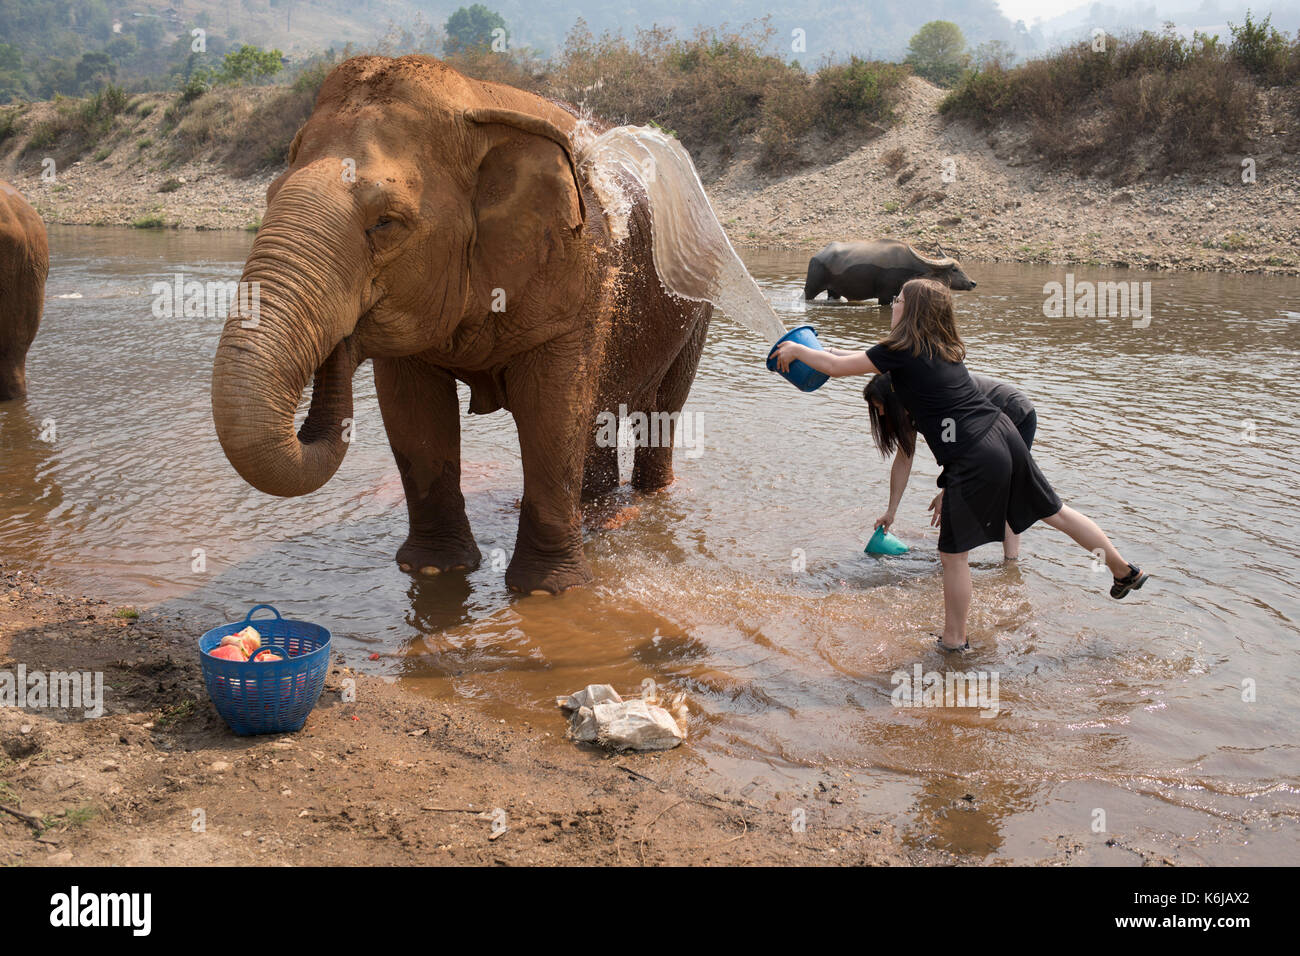 Park patrons bathing elephants during visit, Chiang Mai, Thailand Stock Photo